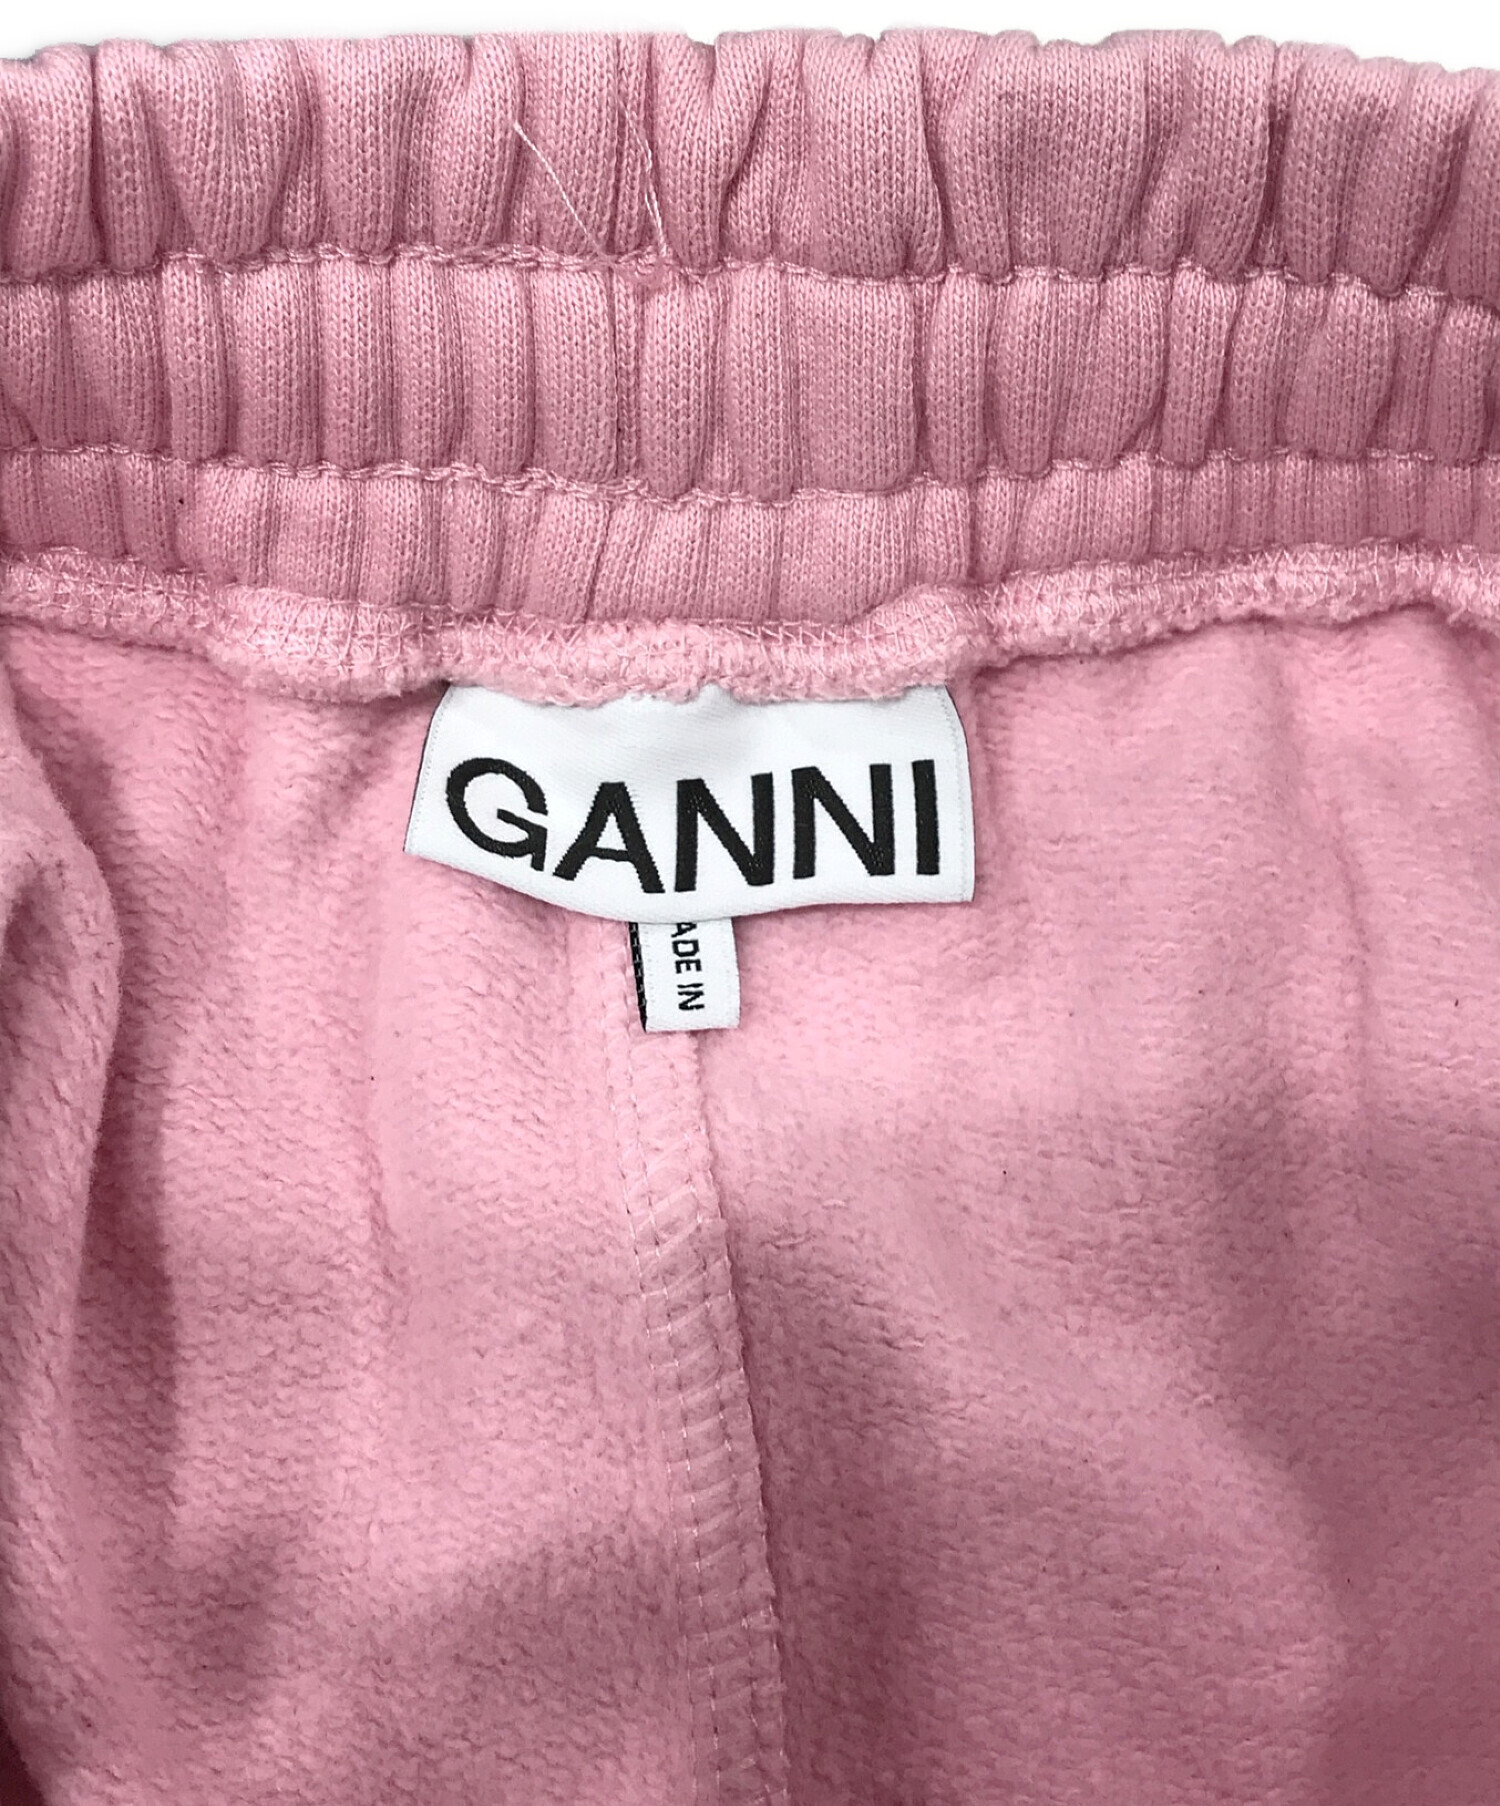 GANNI (ガニー) スウェットパンツ ピンク サイズ:XS